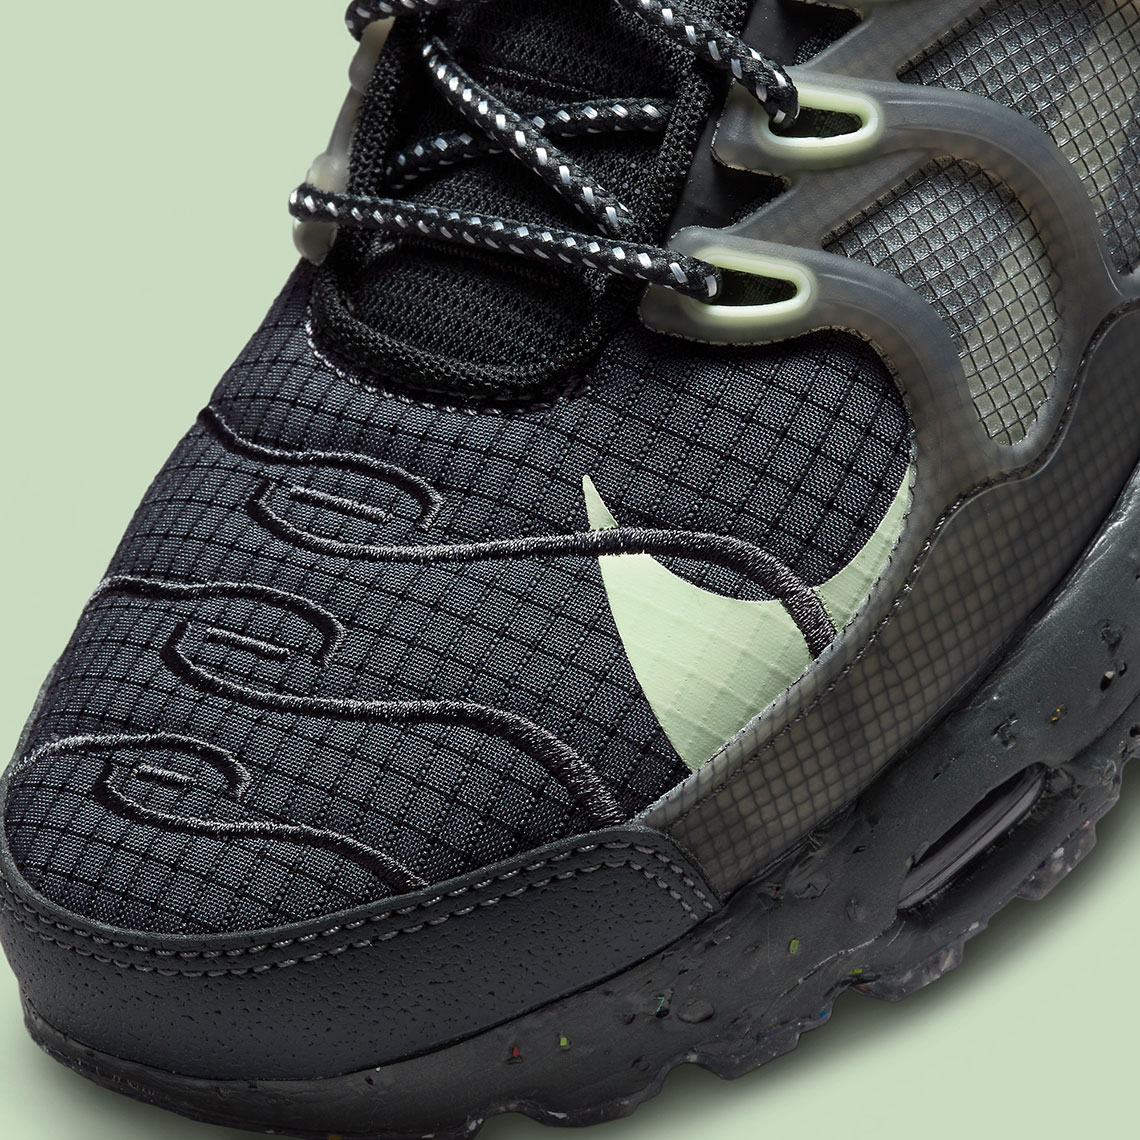 wholesale nike af1s shoes black sneakers boys size Black Barely Volt Dc6078 002 7